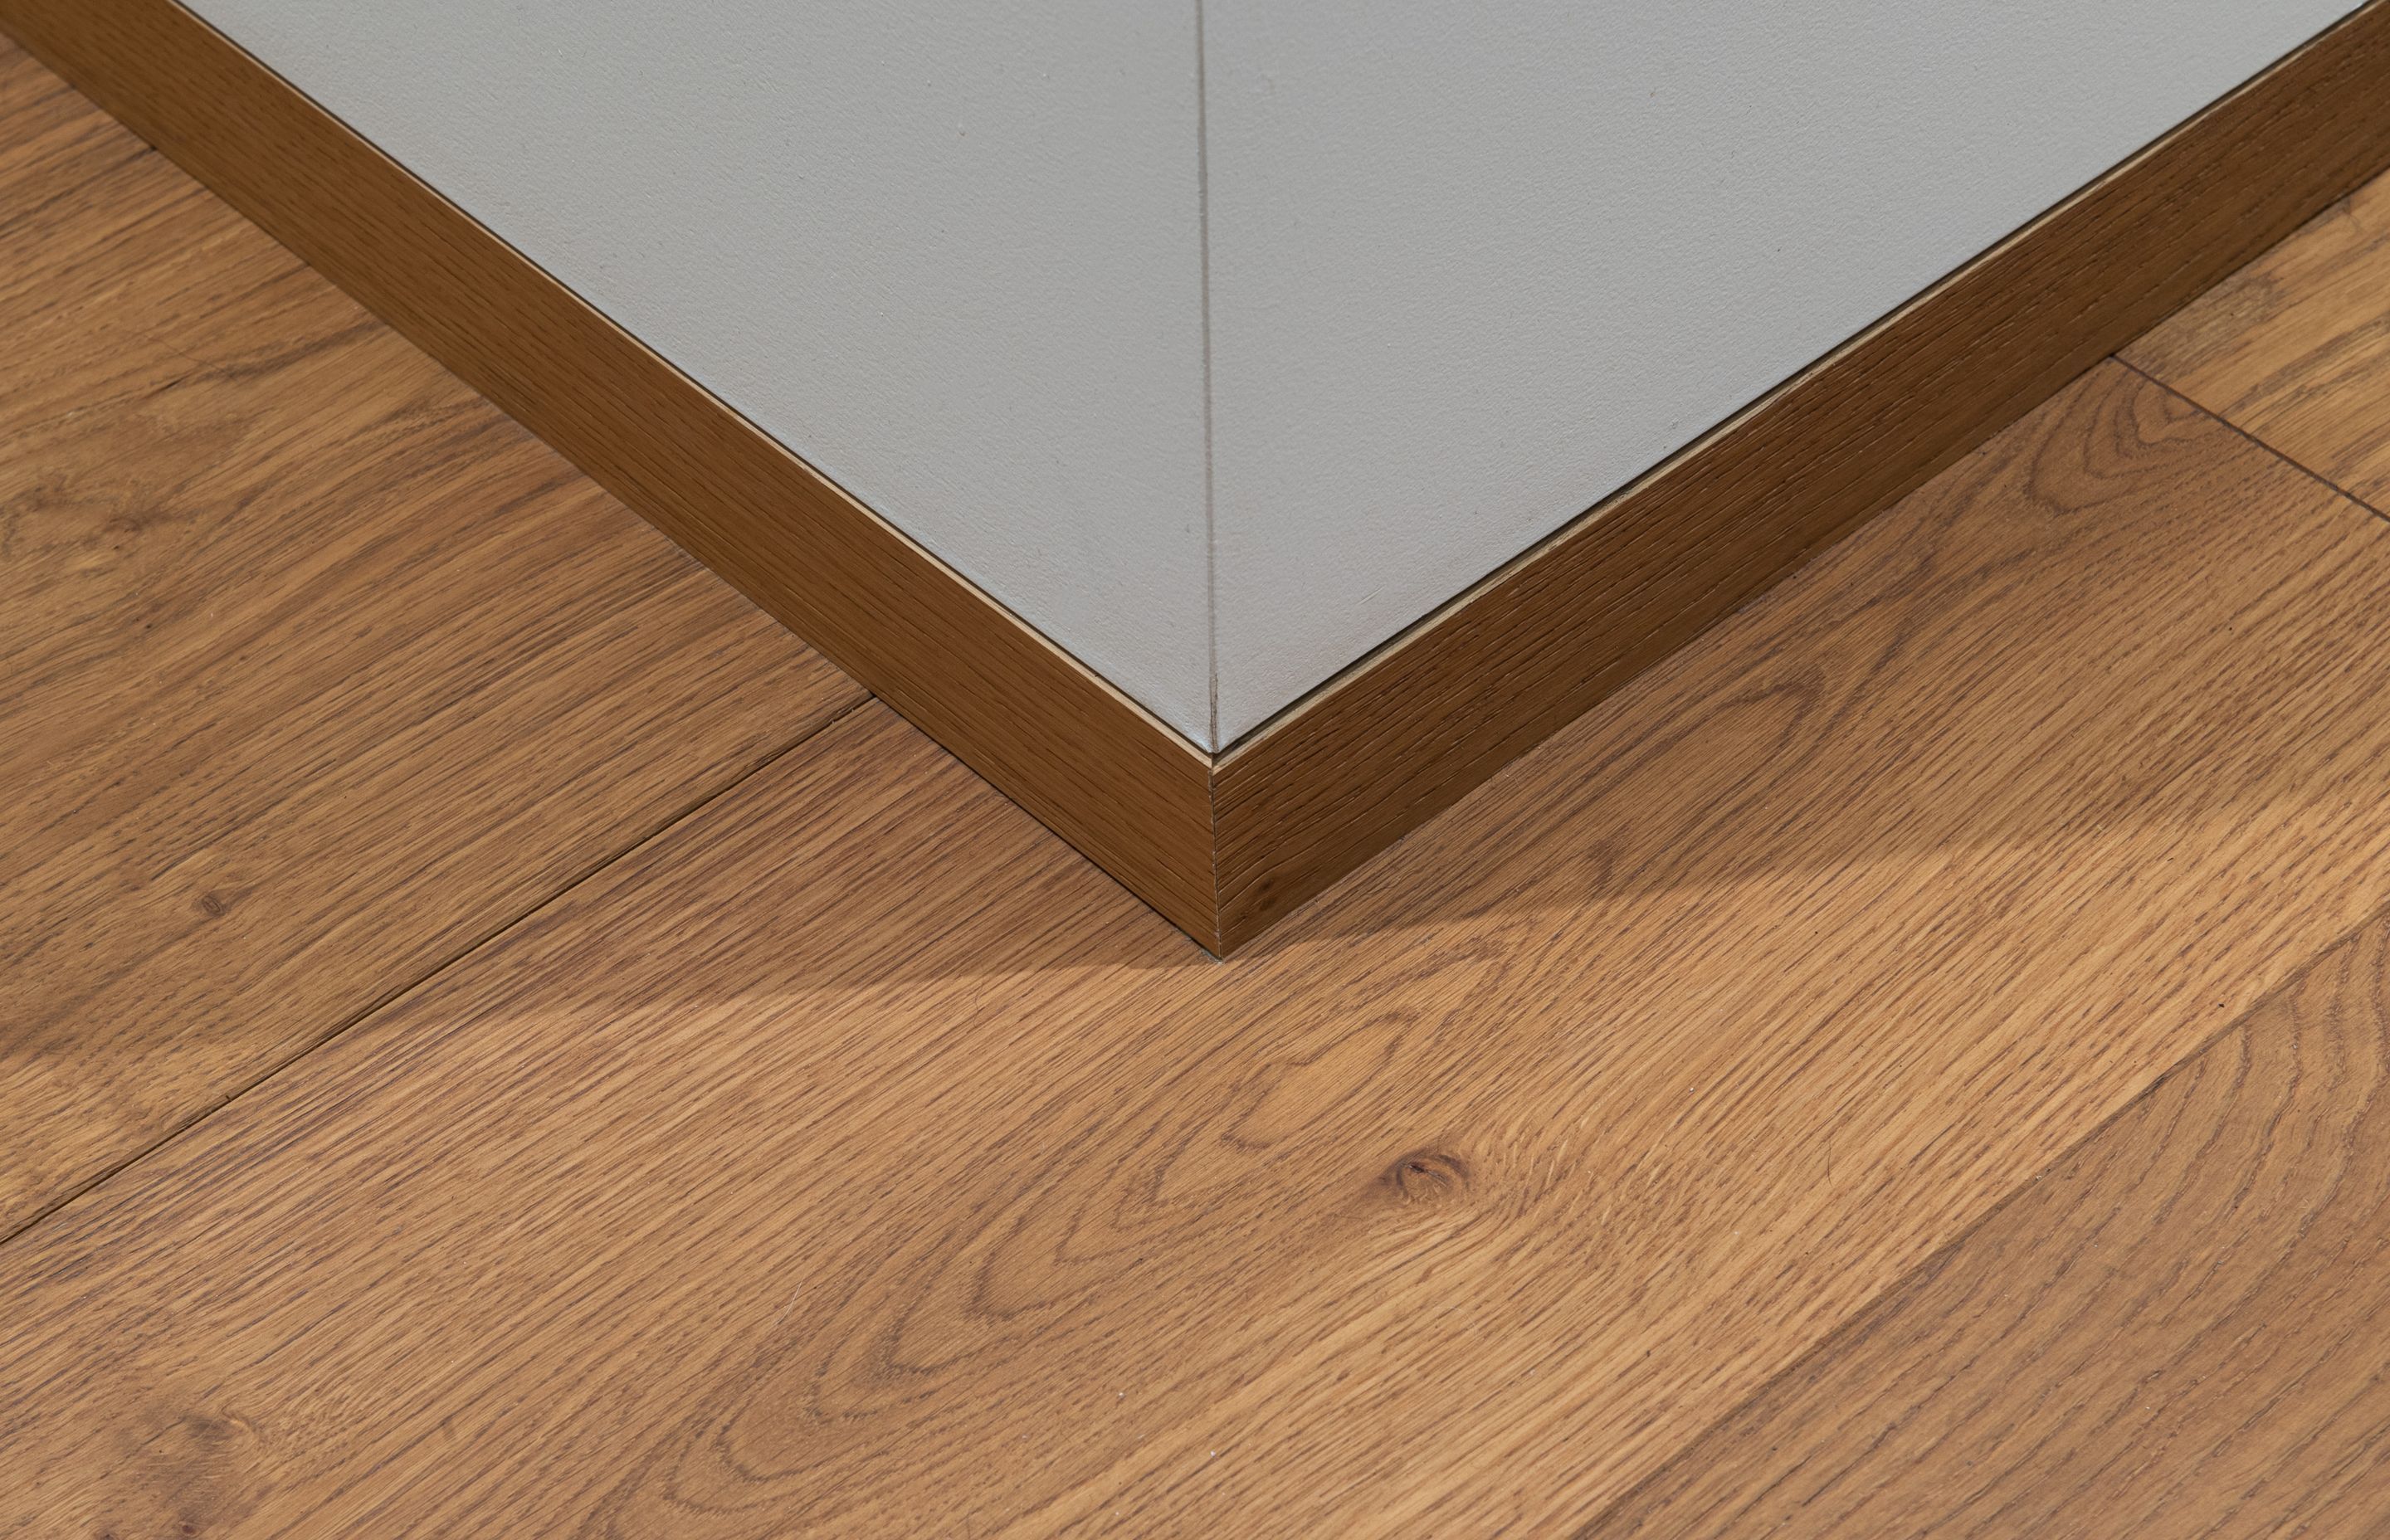 Coatesville Home - 220x21mm Light Feature Grade Engineered European Oak flooring, prefinished in "Bourbon" Rubio Monocoat oil and Ciranova Titan Hardwax